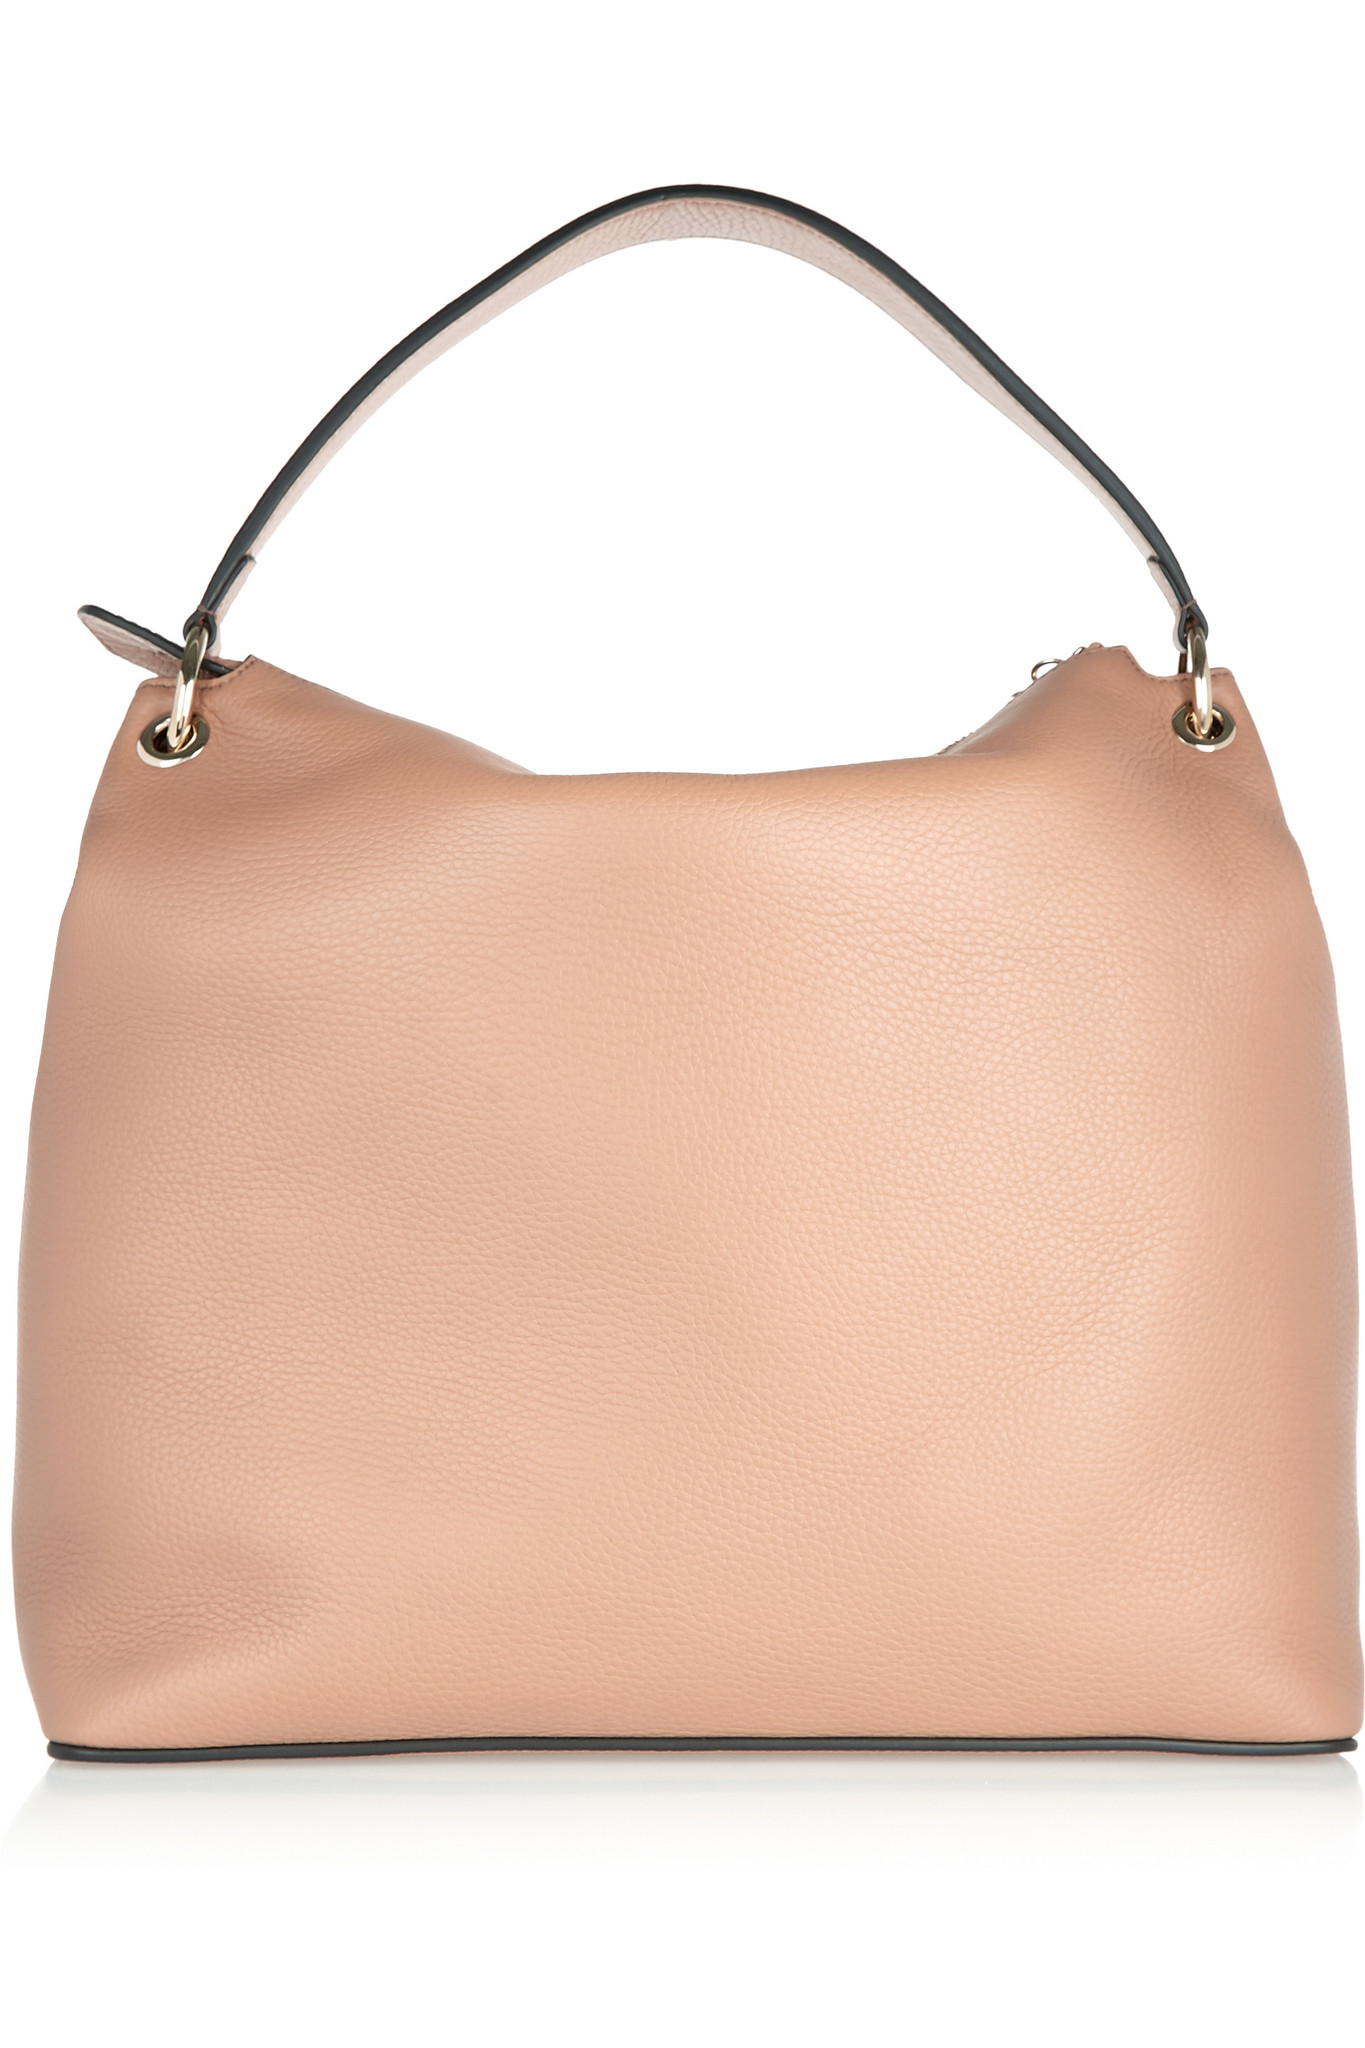 Gucci, Soho medium textured-leather shoulder bag